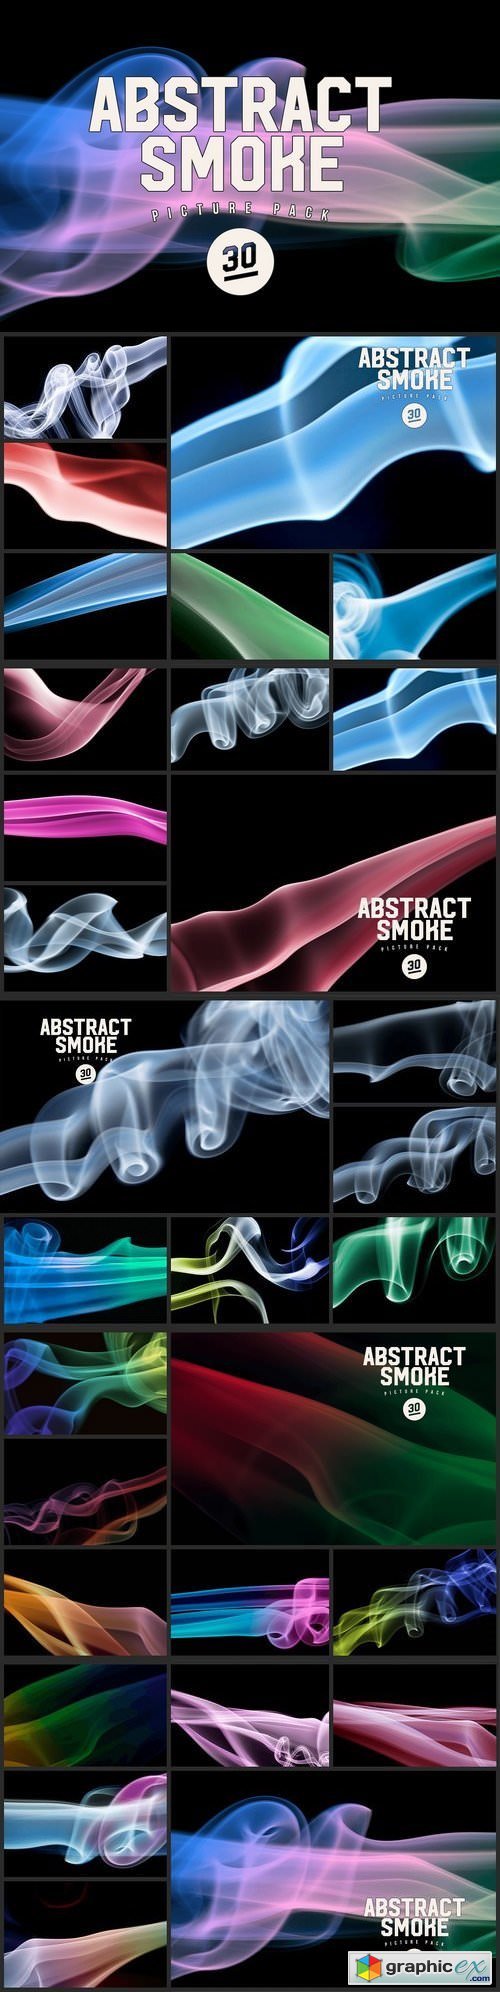 Abstract Smoke Photo Pack